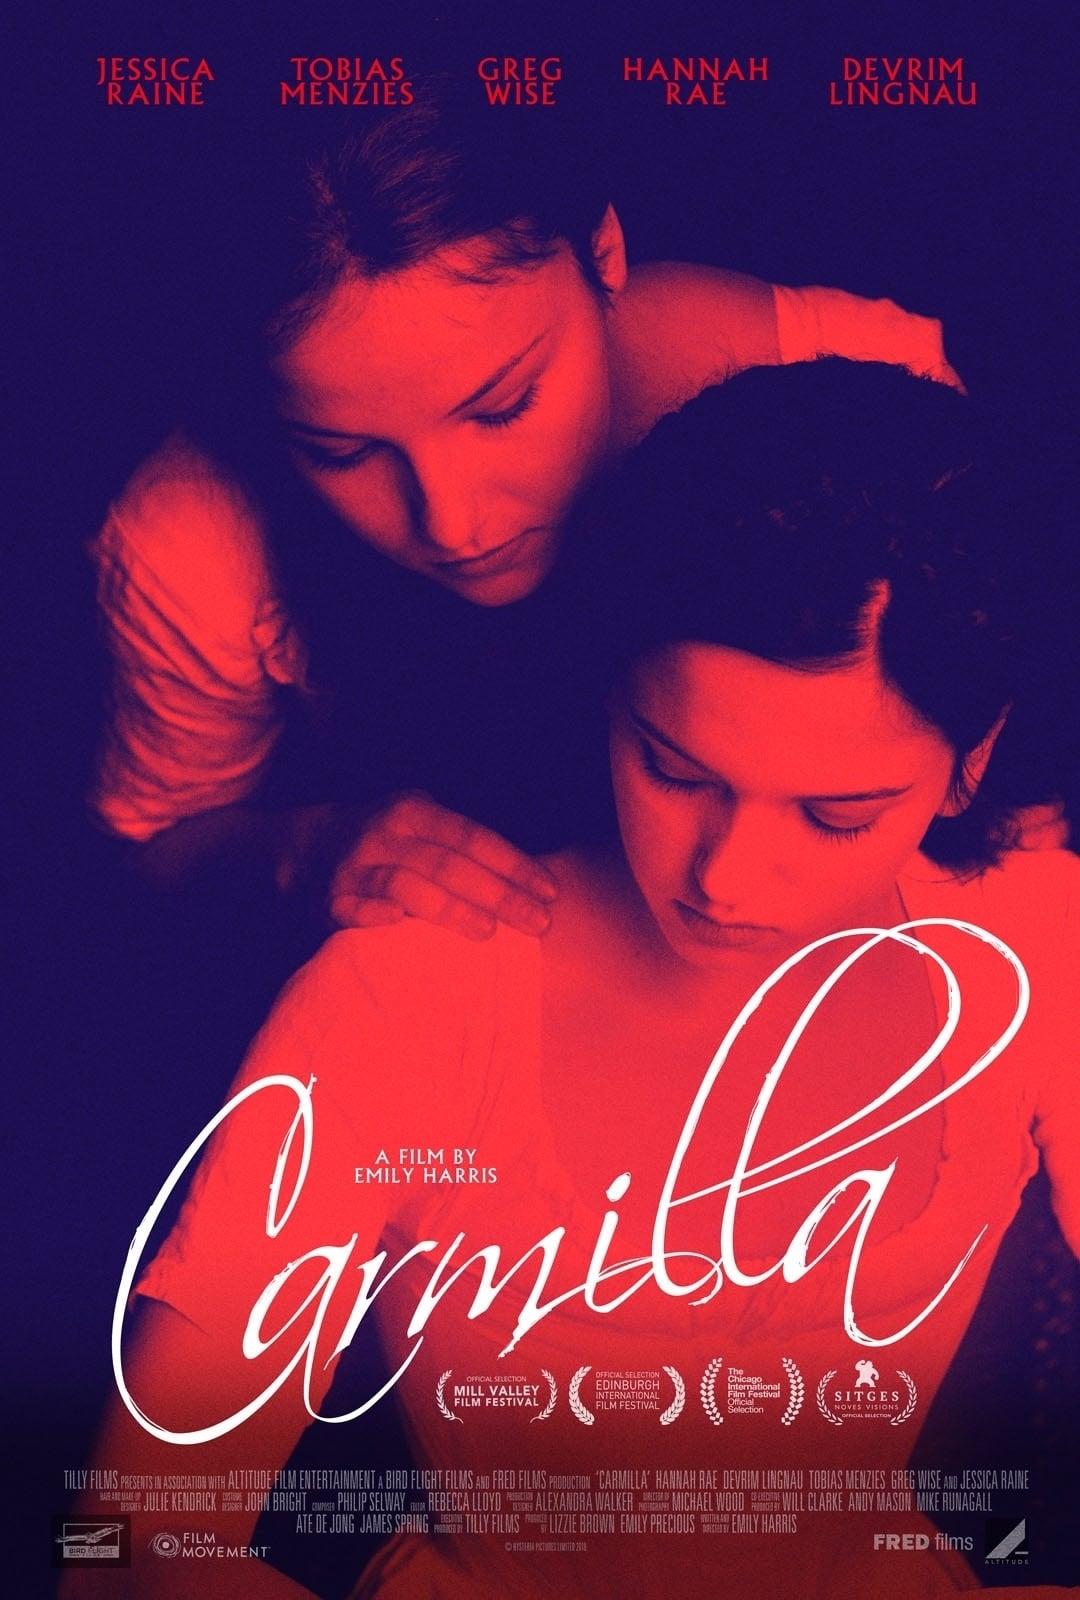 Carmilla poster